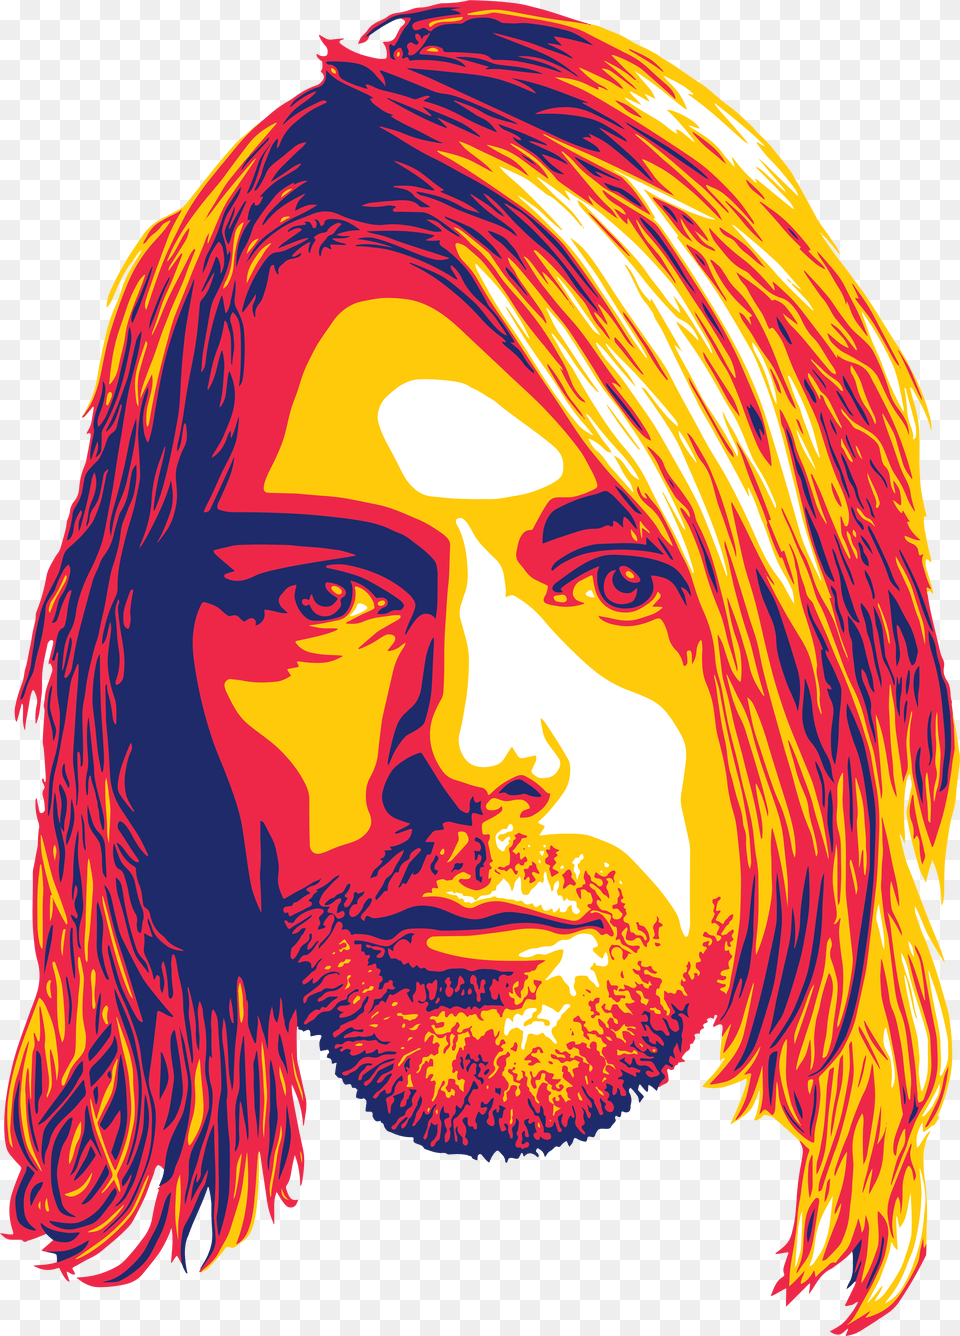 Kurt Cobain Nirvana Grunge Vector Music Illustration Png Image